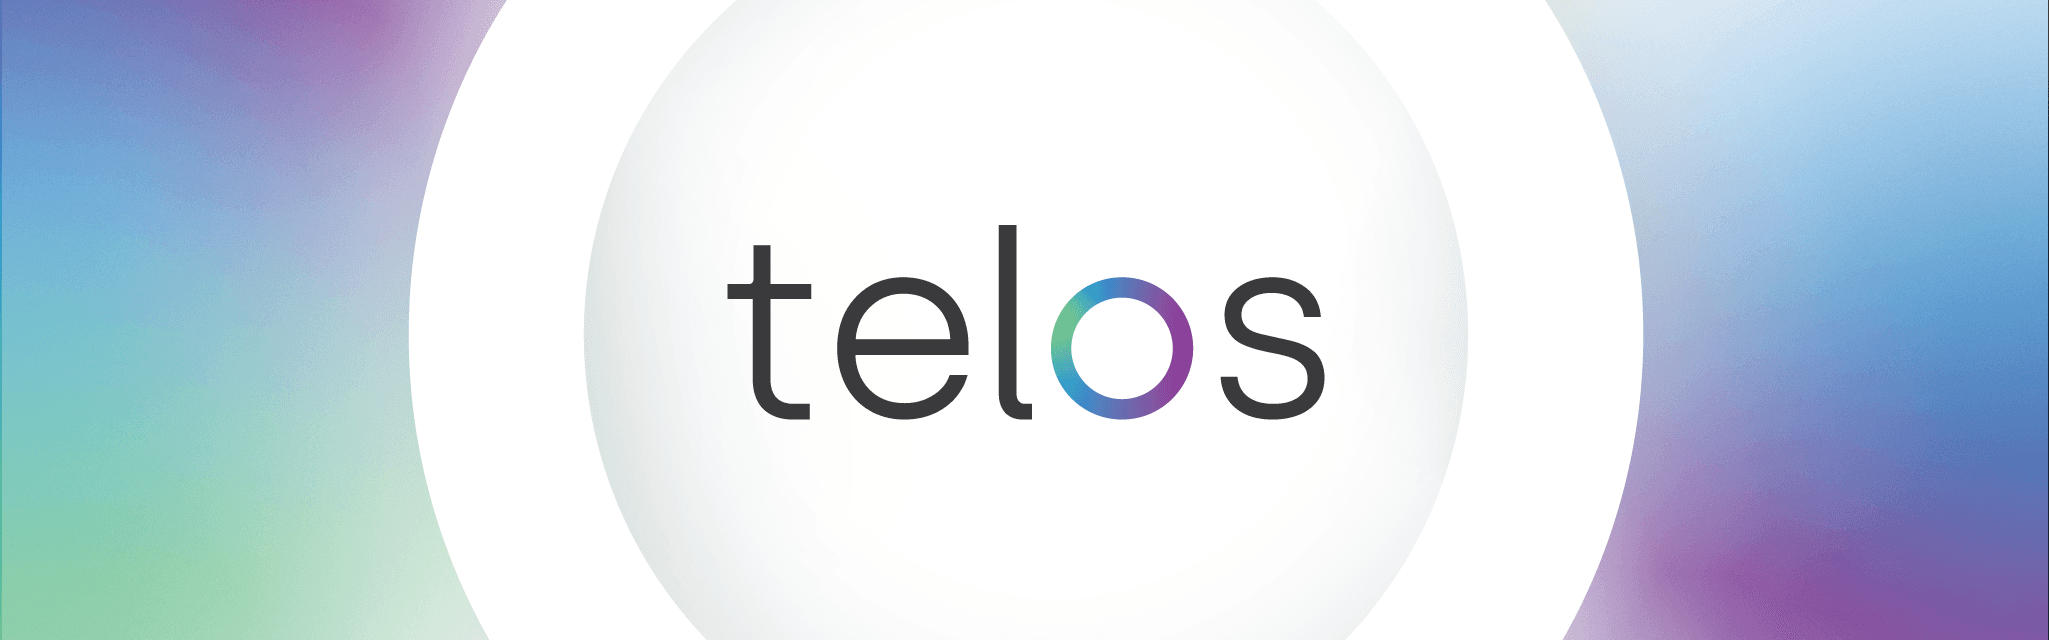 Telos_cover-image